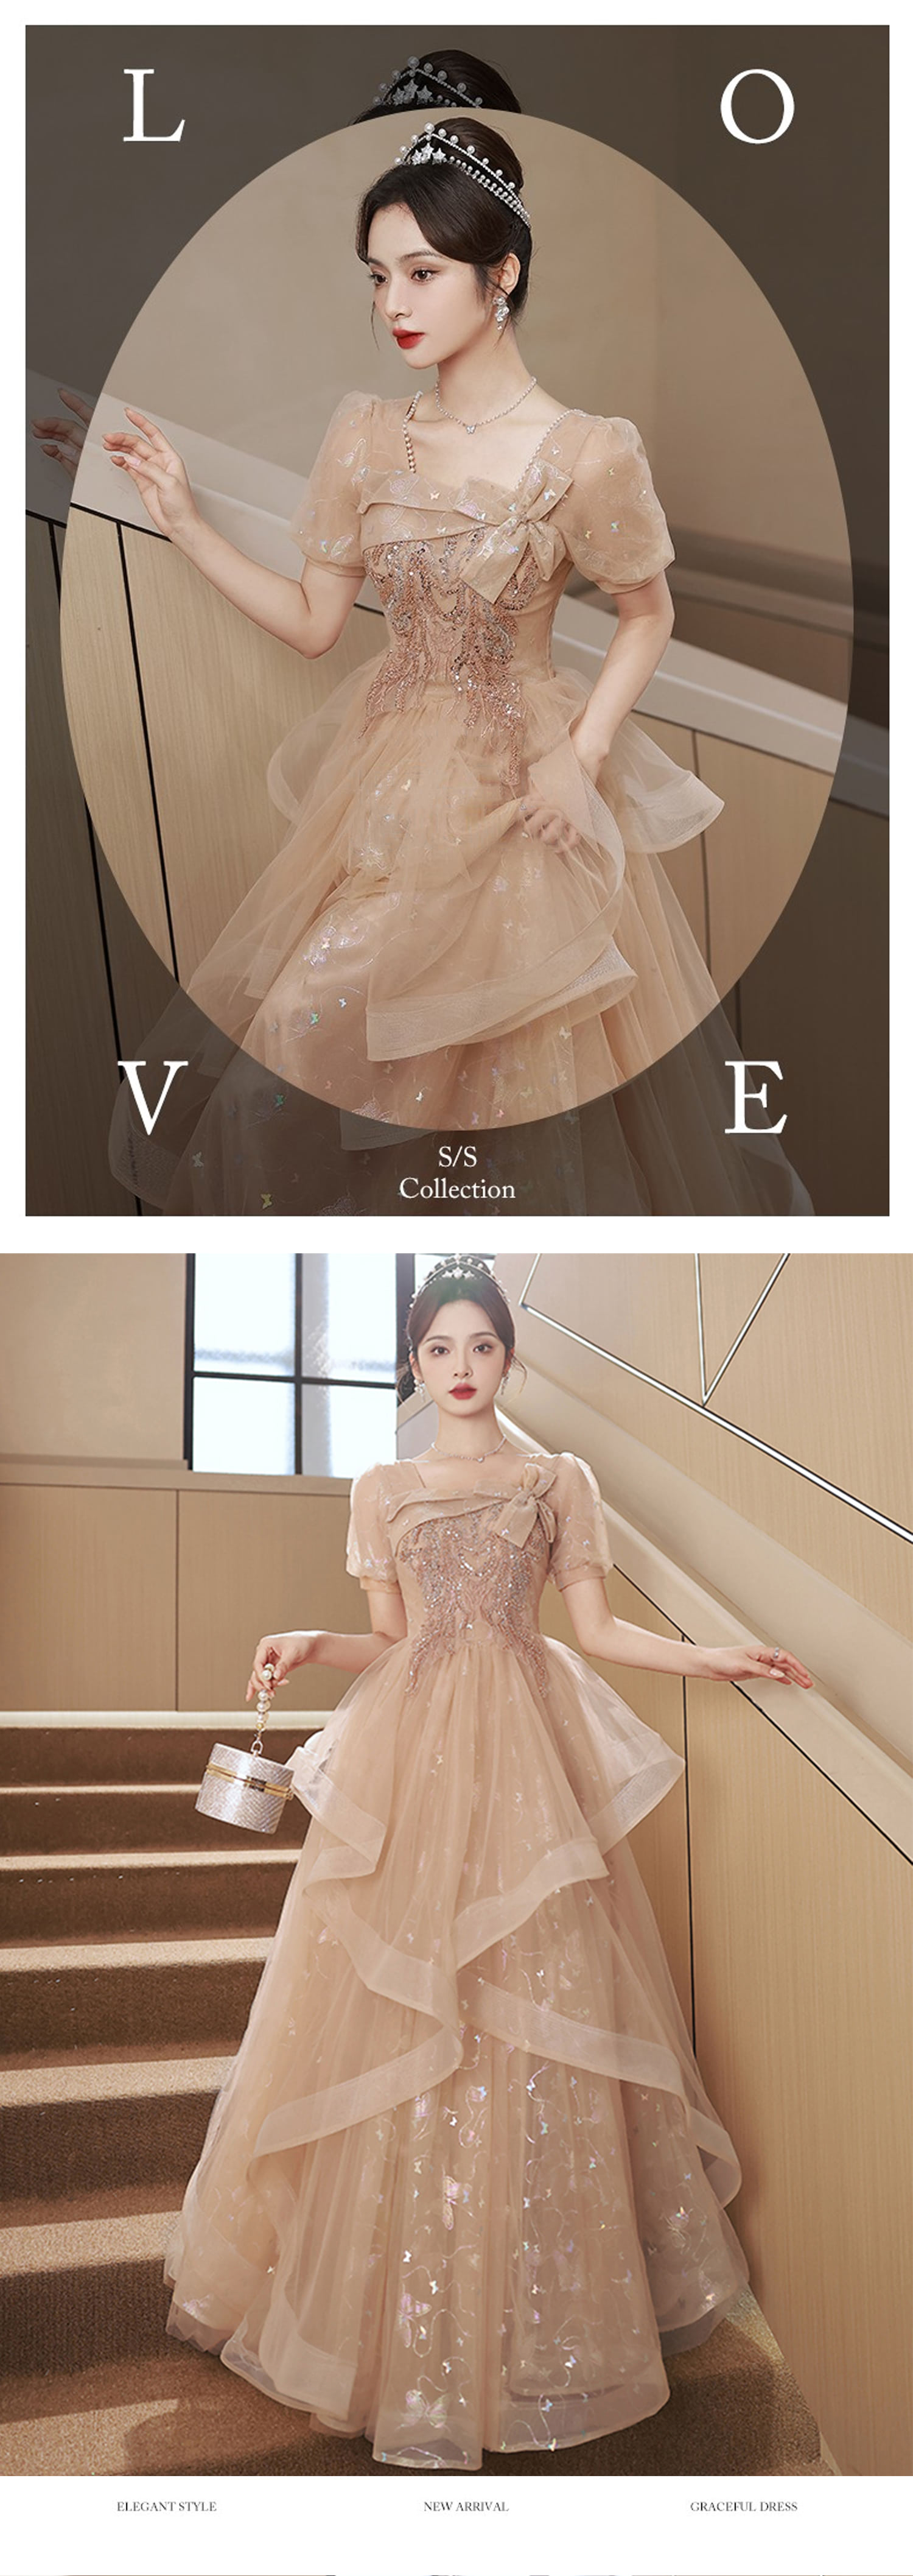 Unique-A-Line-Princess-Short-Sleeve-Ball-Gown-Long-Prom-Dress14